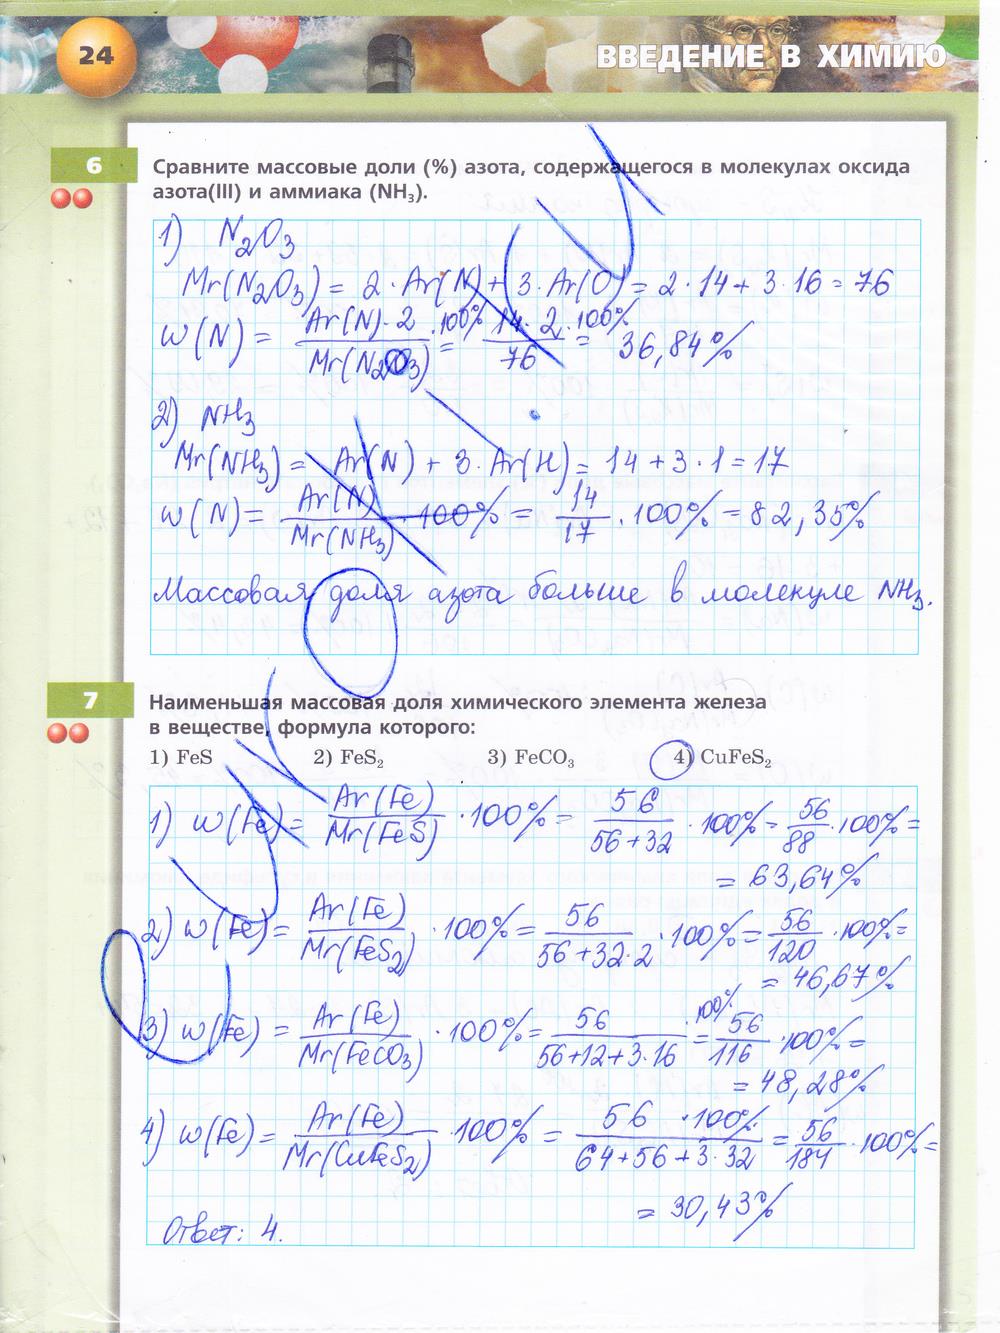 гдз 8 класс тетрадь-тренажёр страница 24 химия Гара